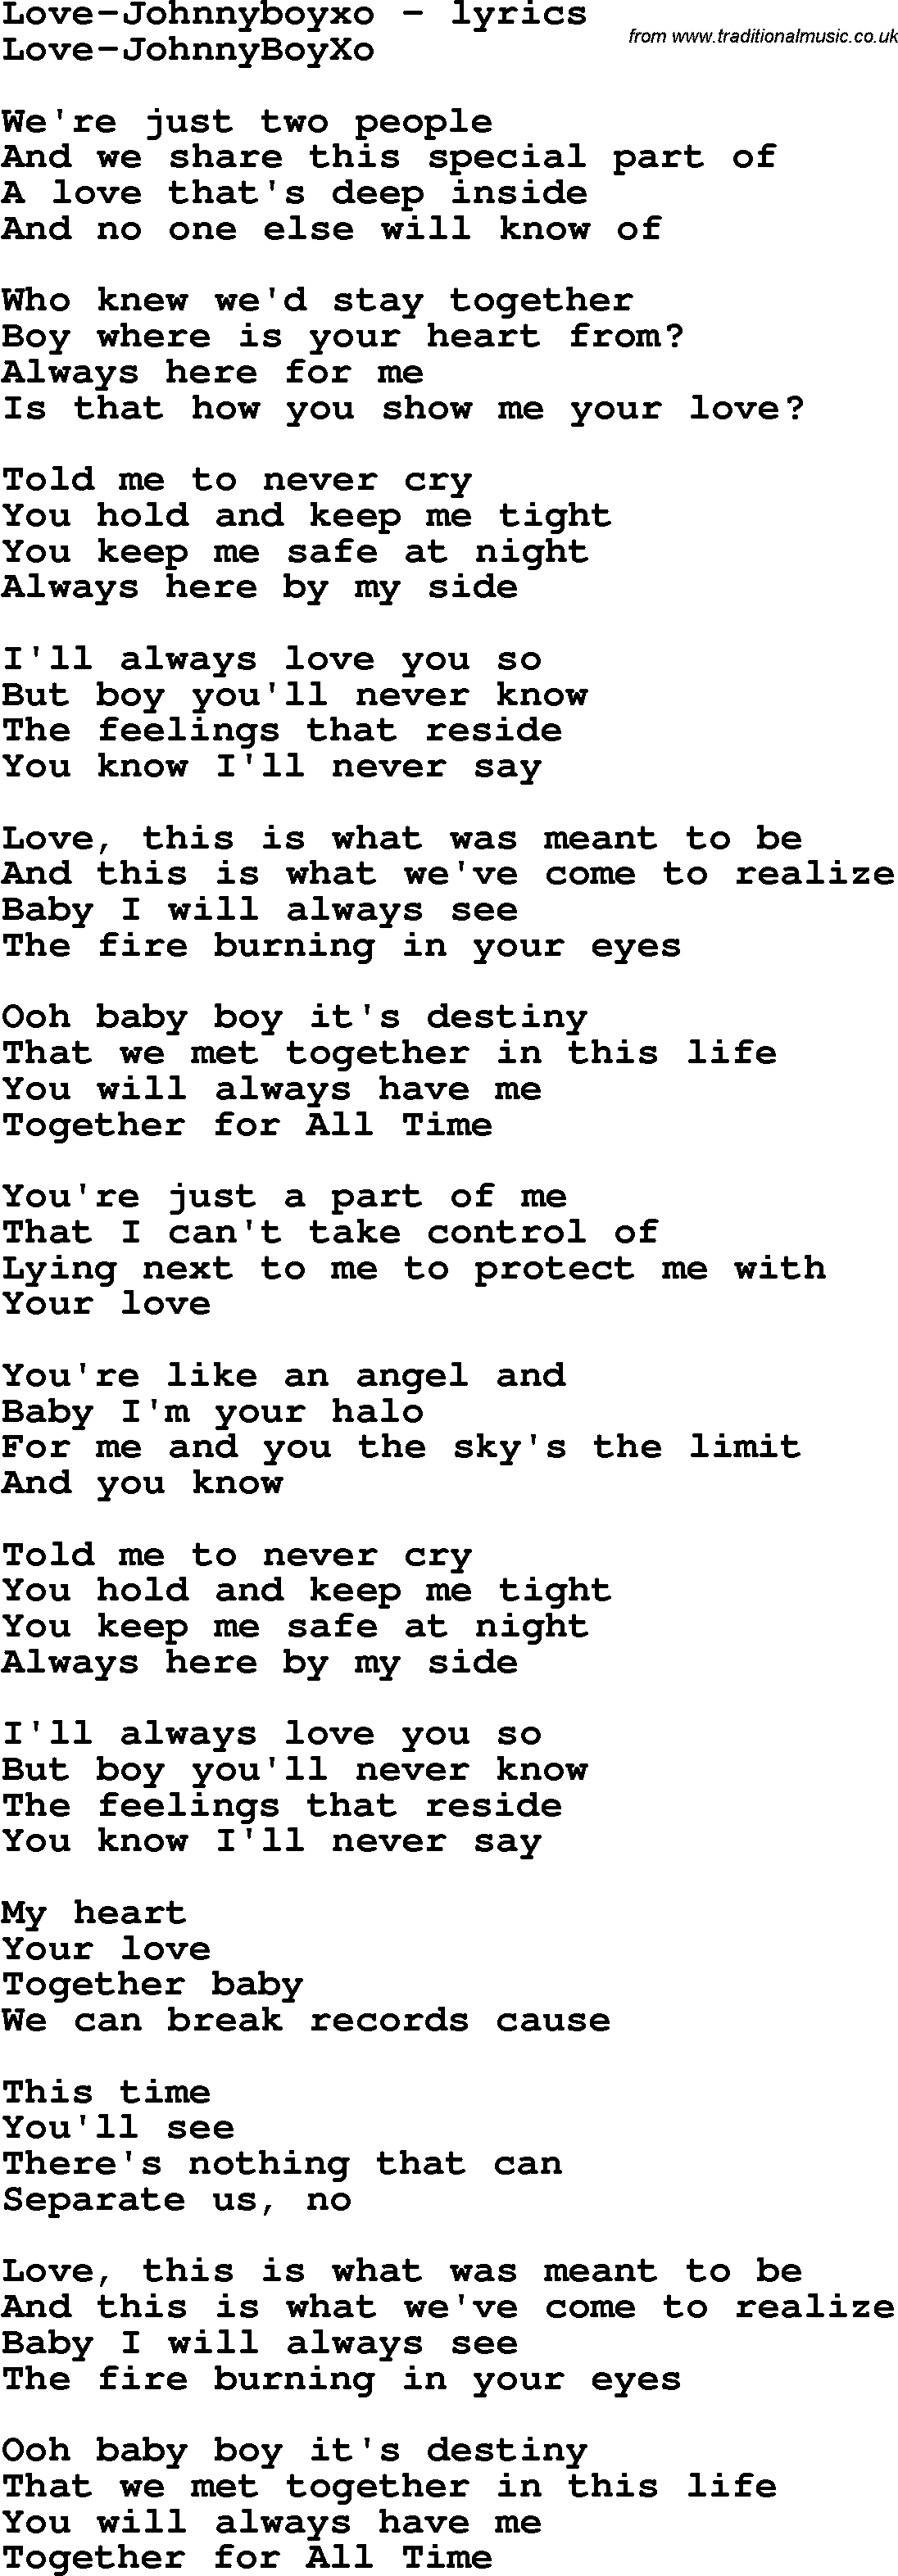 Love Song Lyrics for: Love-Johnnyboyxo